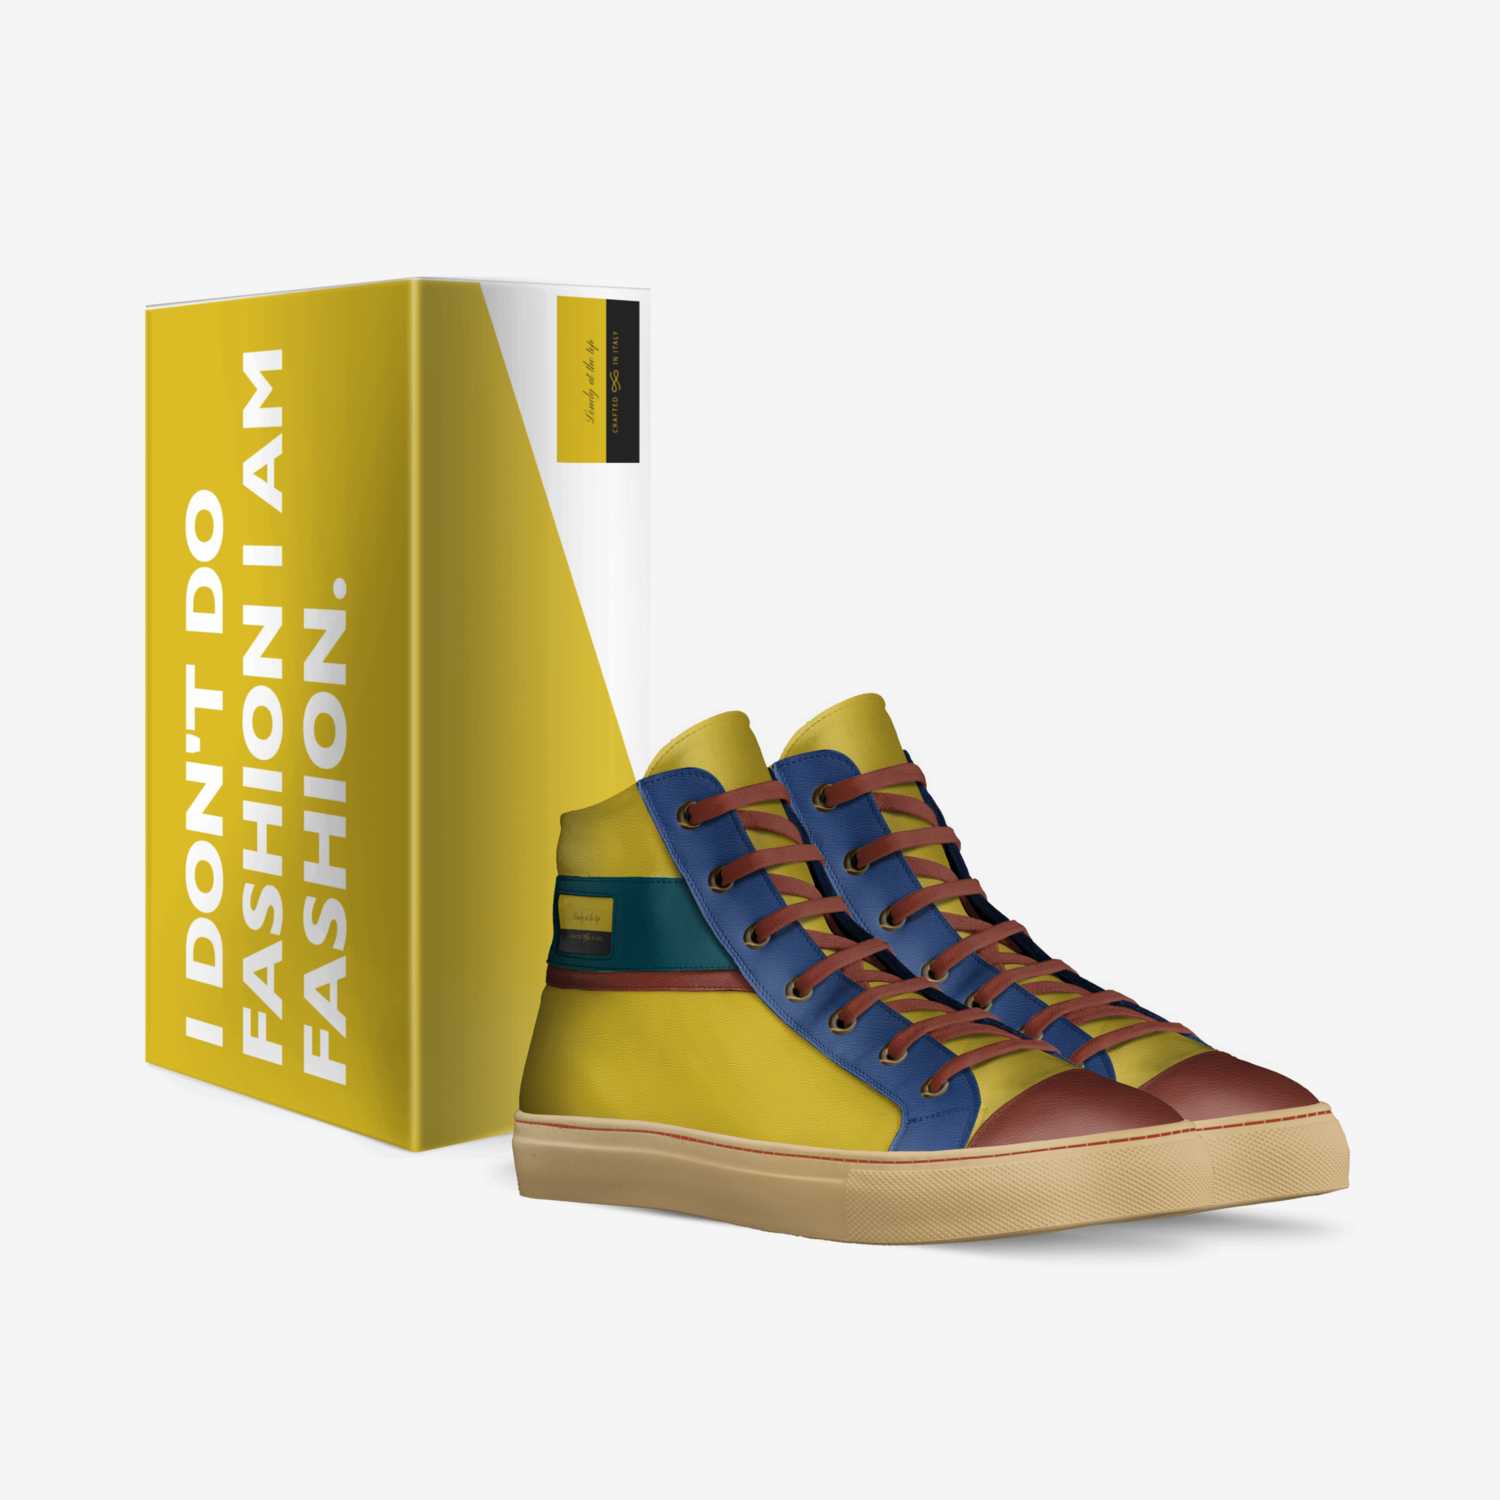 Yia yia custom made in Italy shoes by Lanon Ganuti | Box view